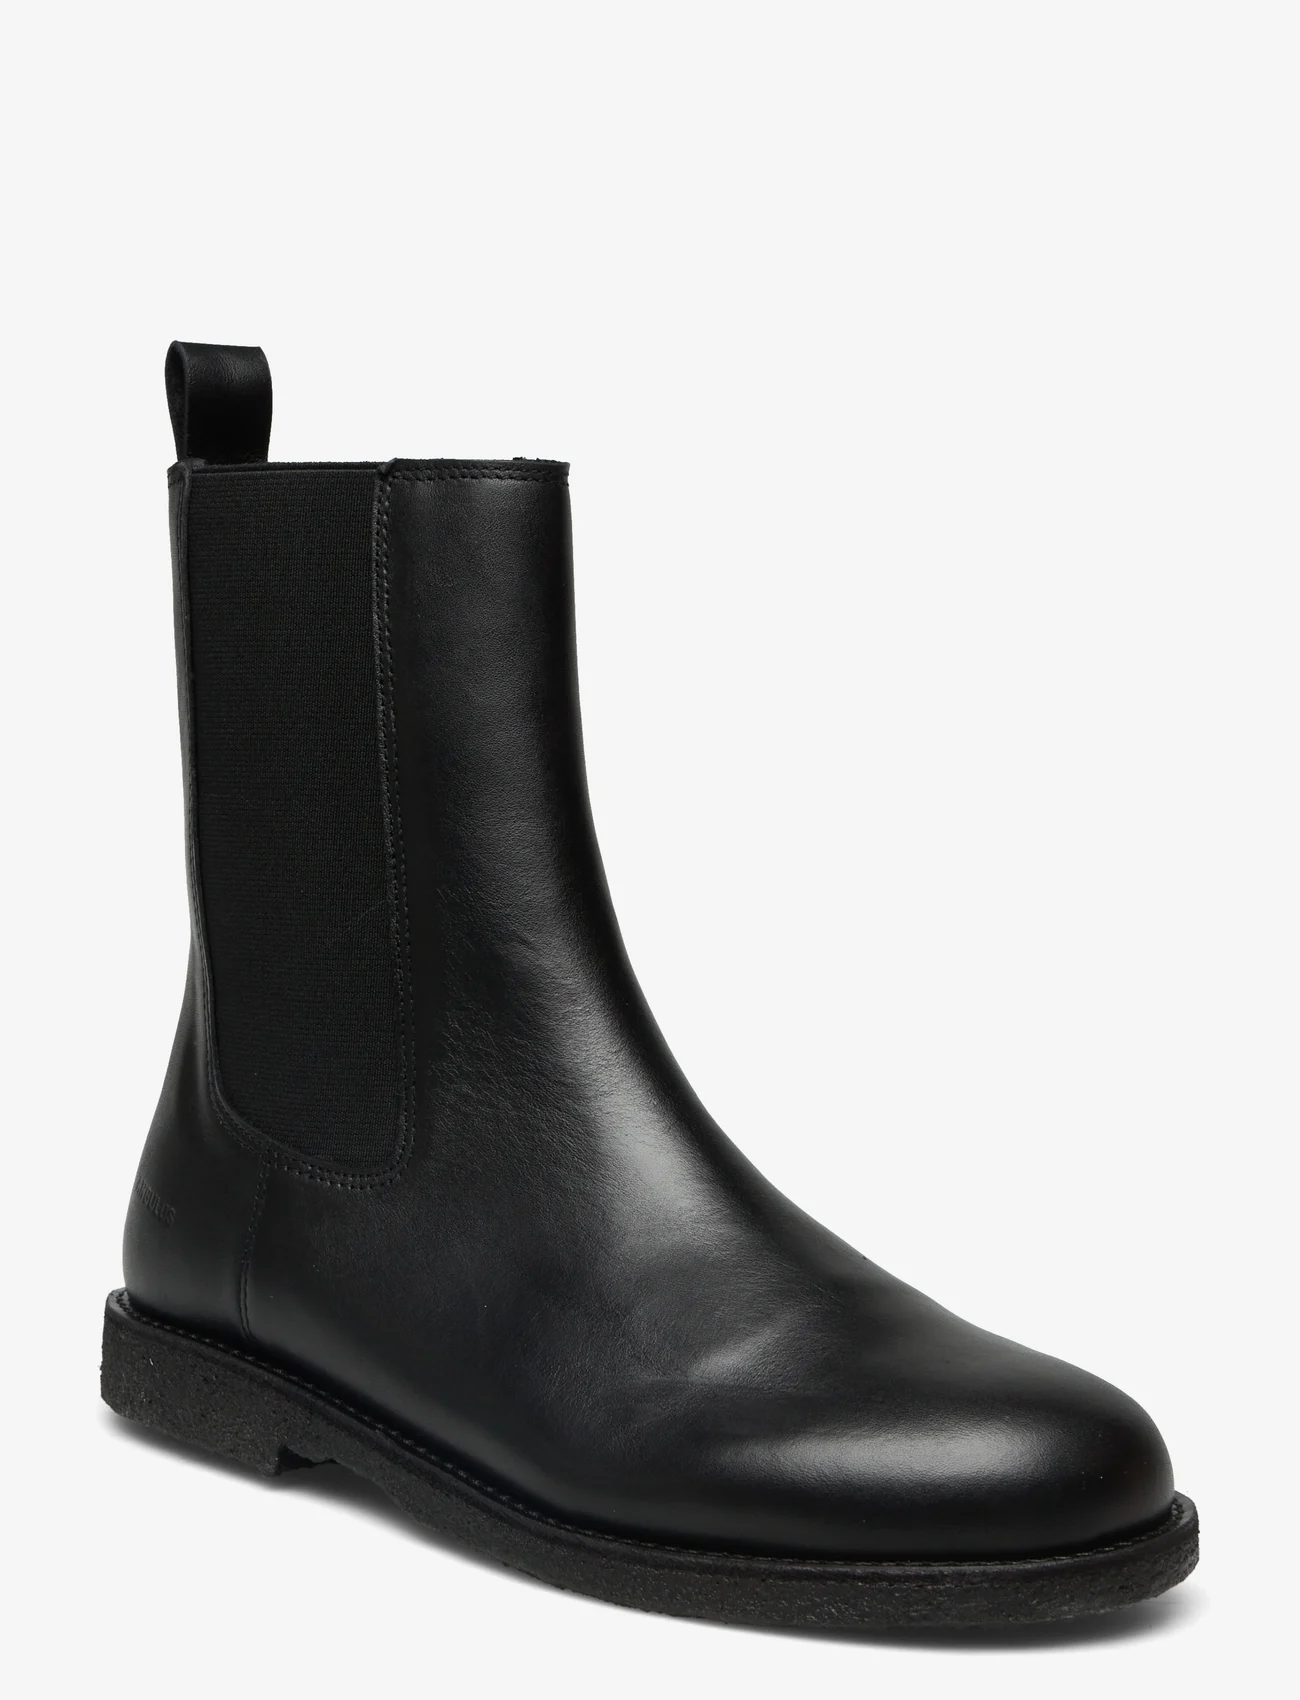 ANGULUS - Boots - flat - chelsea stila zābaki - 1604/001 black/black - 0